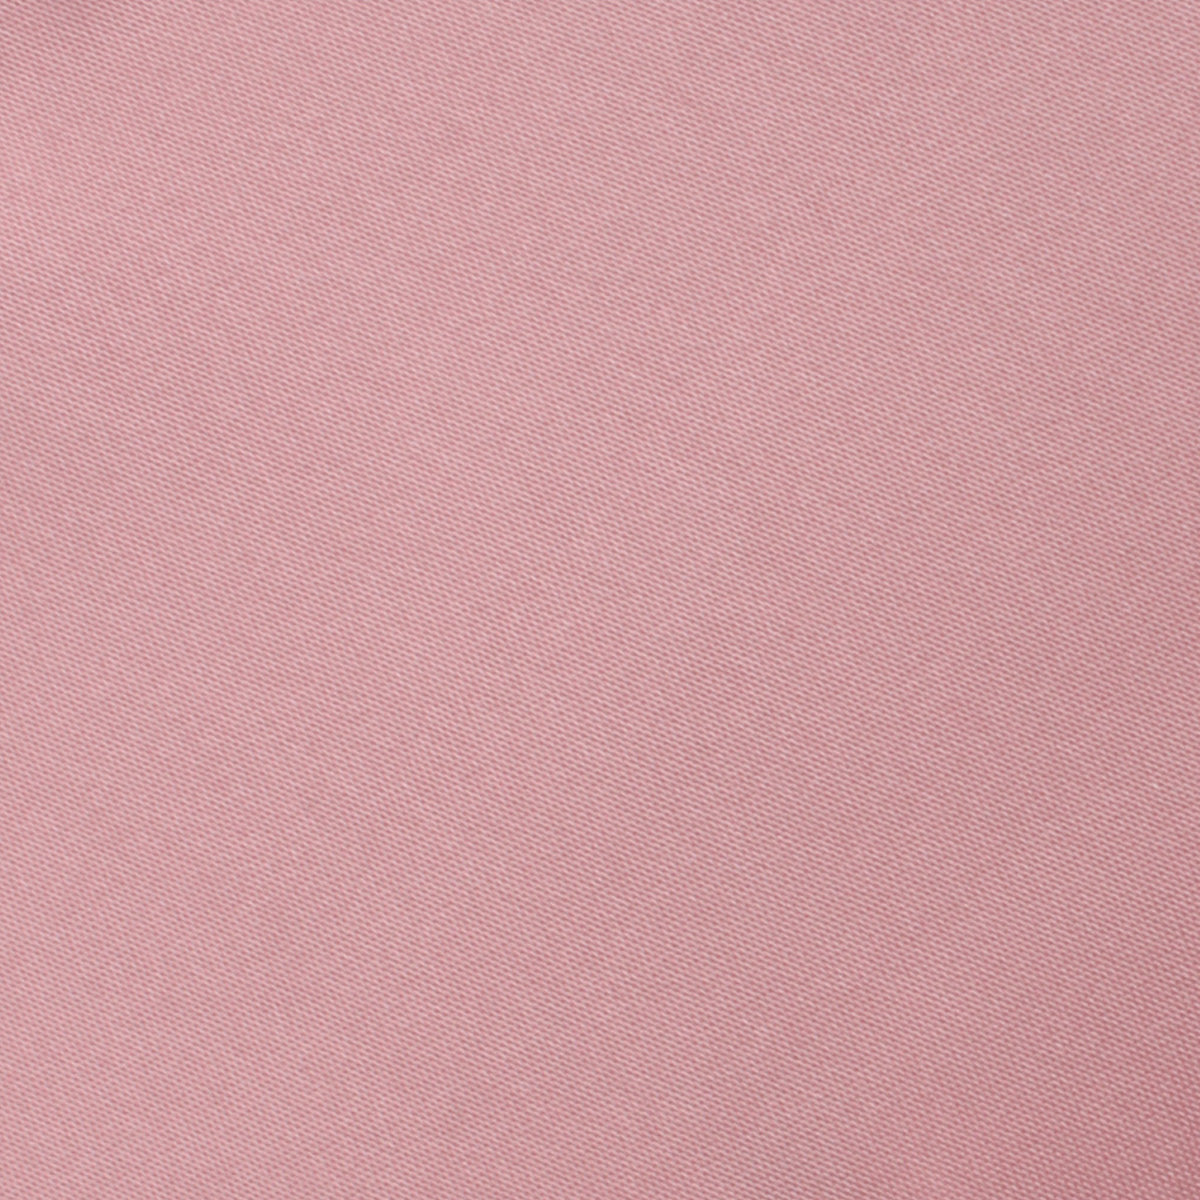 Dusty Blush Pink Satin Self Bow Tie Fabric